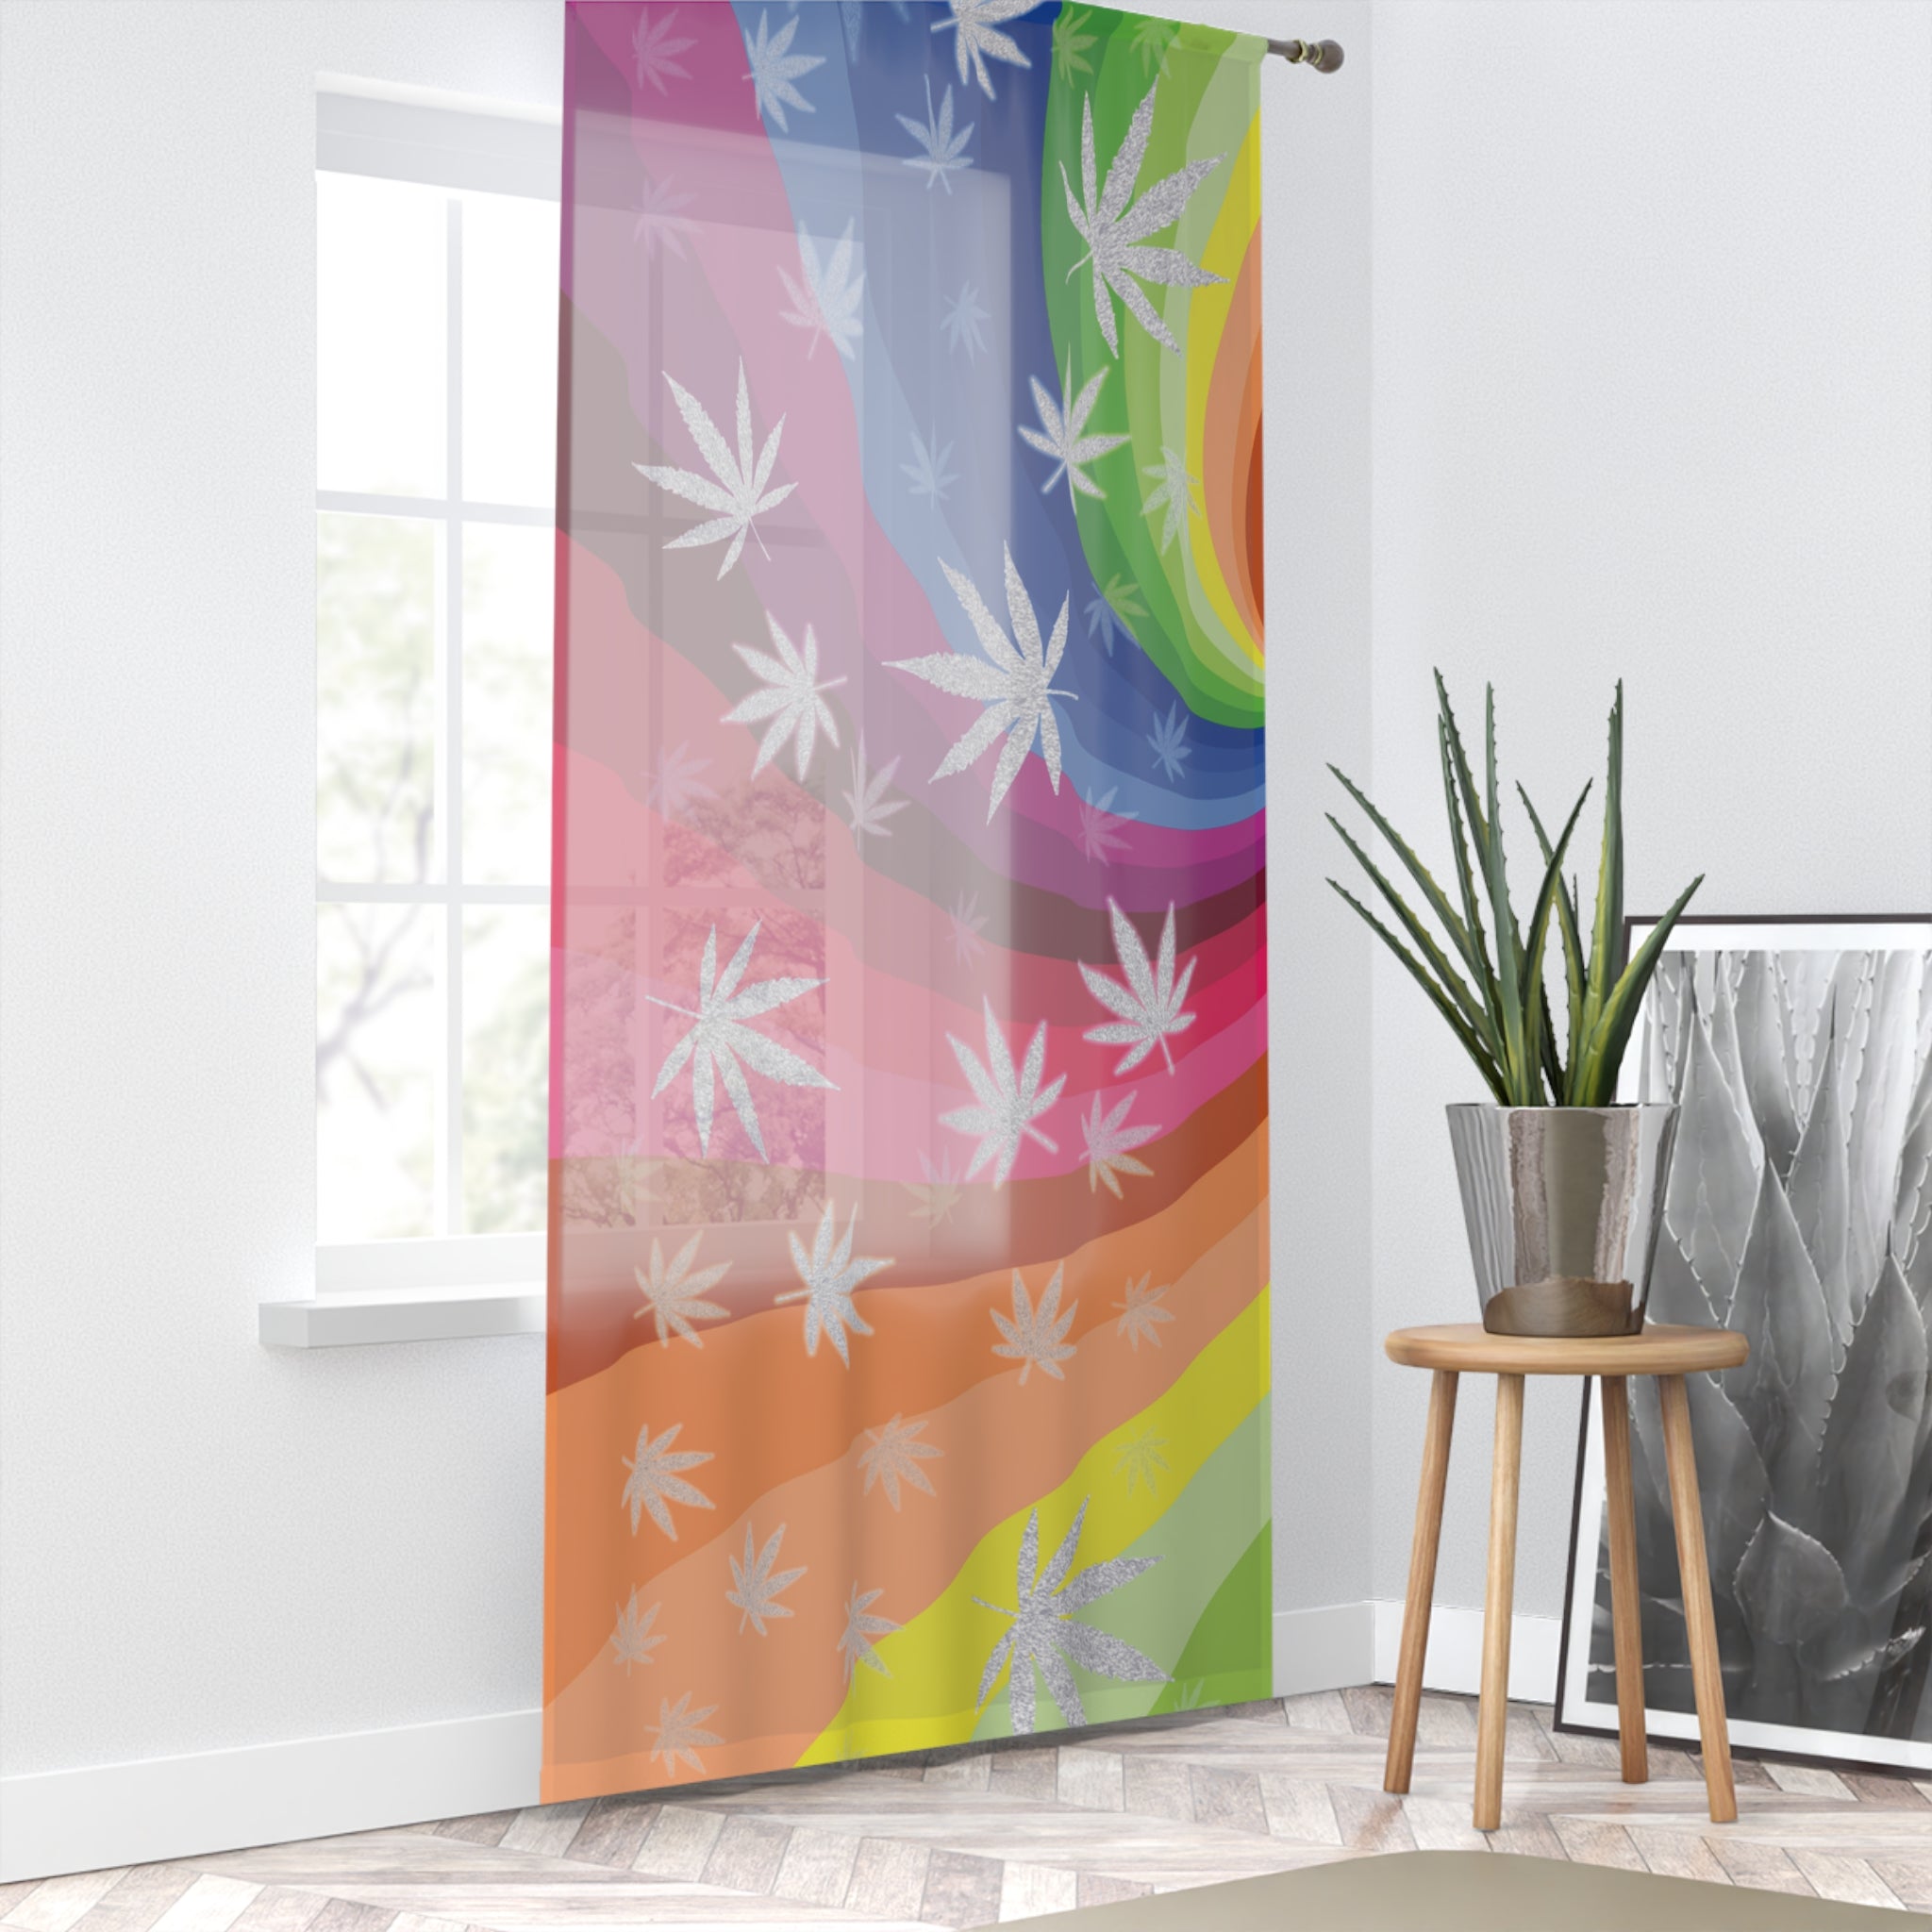 Rainbow Sheer Cannabis Leaf Window Curtain